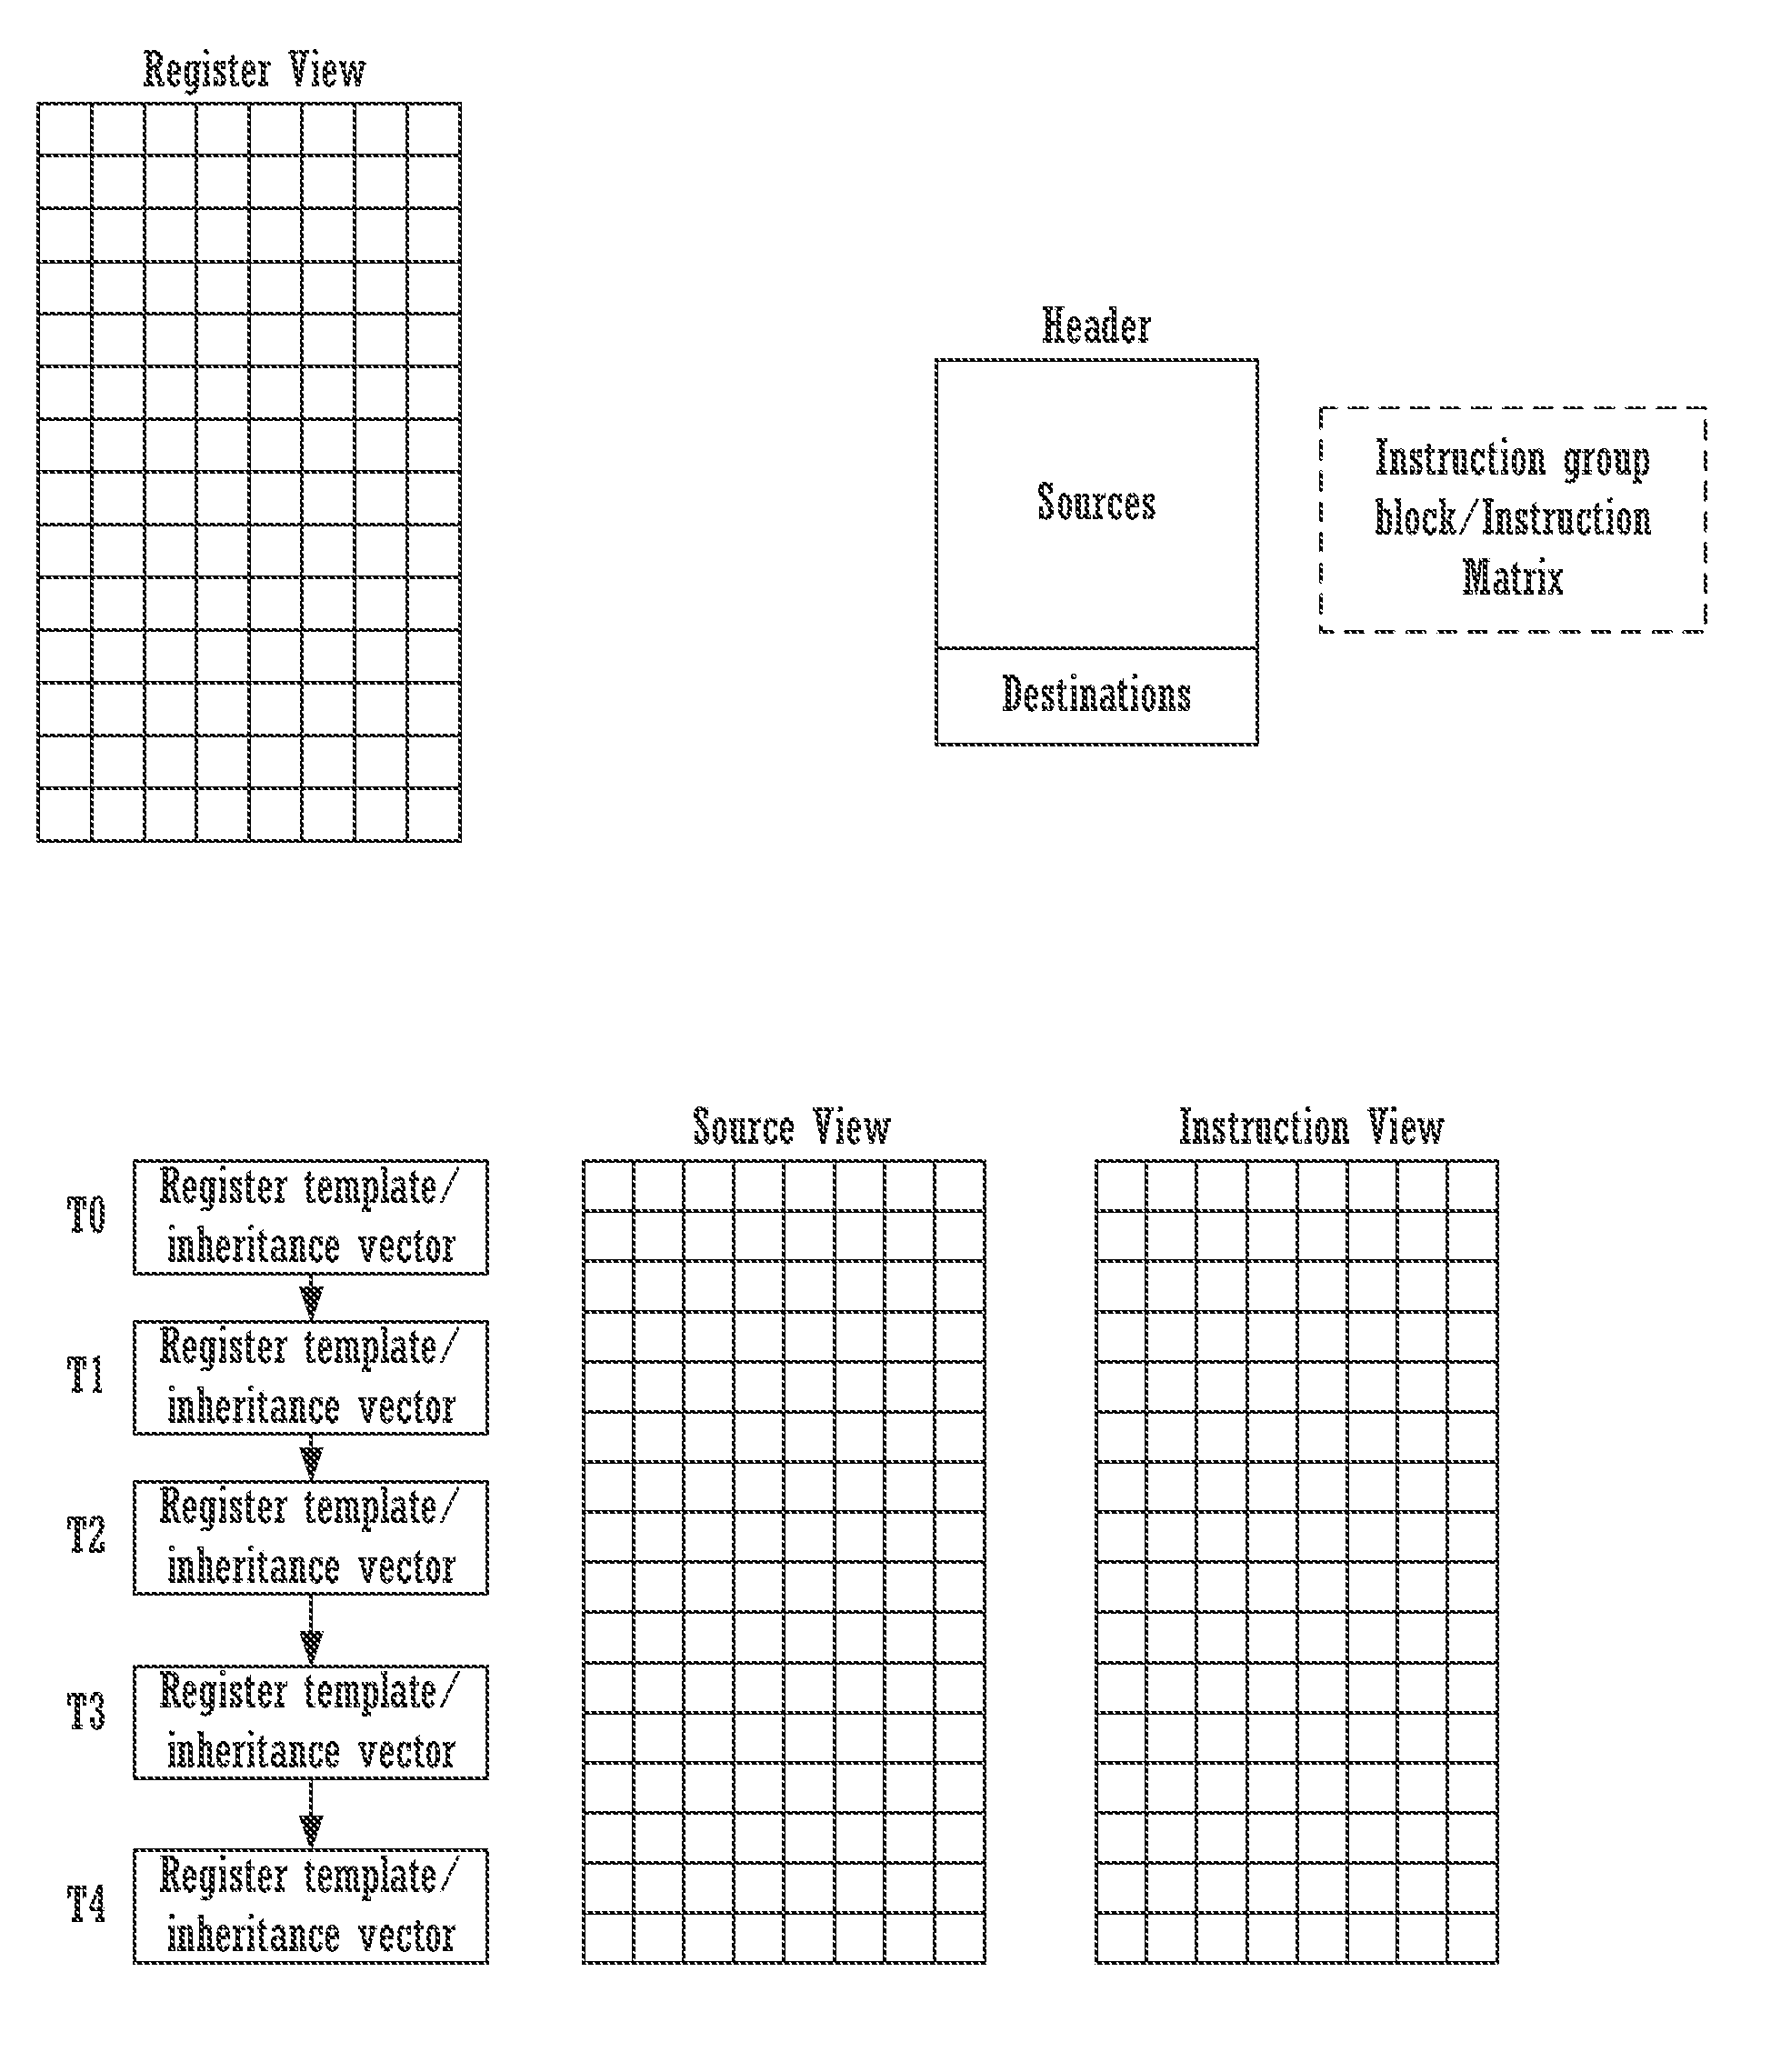 Method for performing dual dispatch of blocks and half blocks